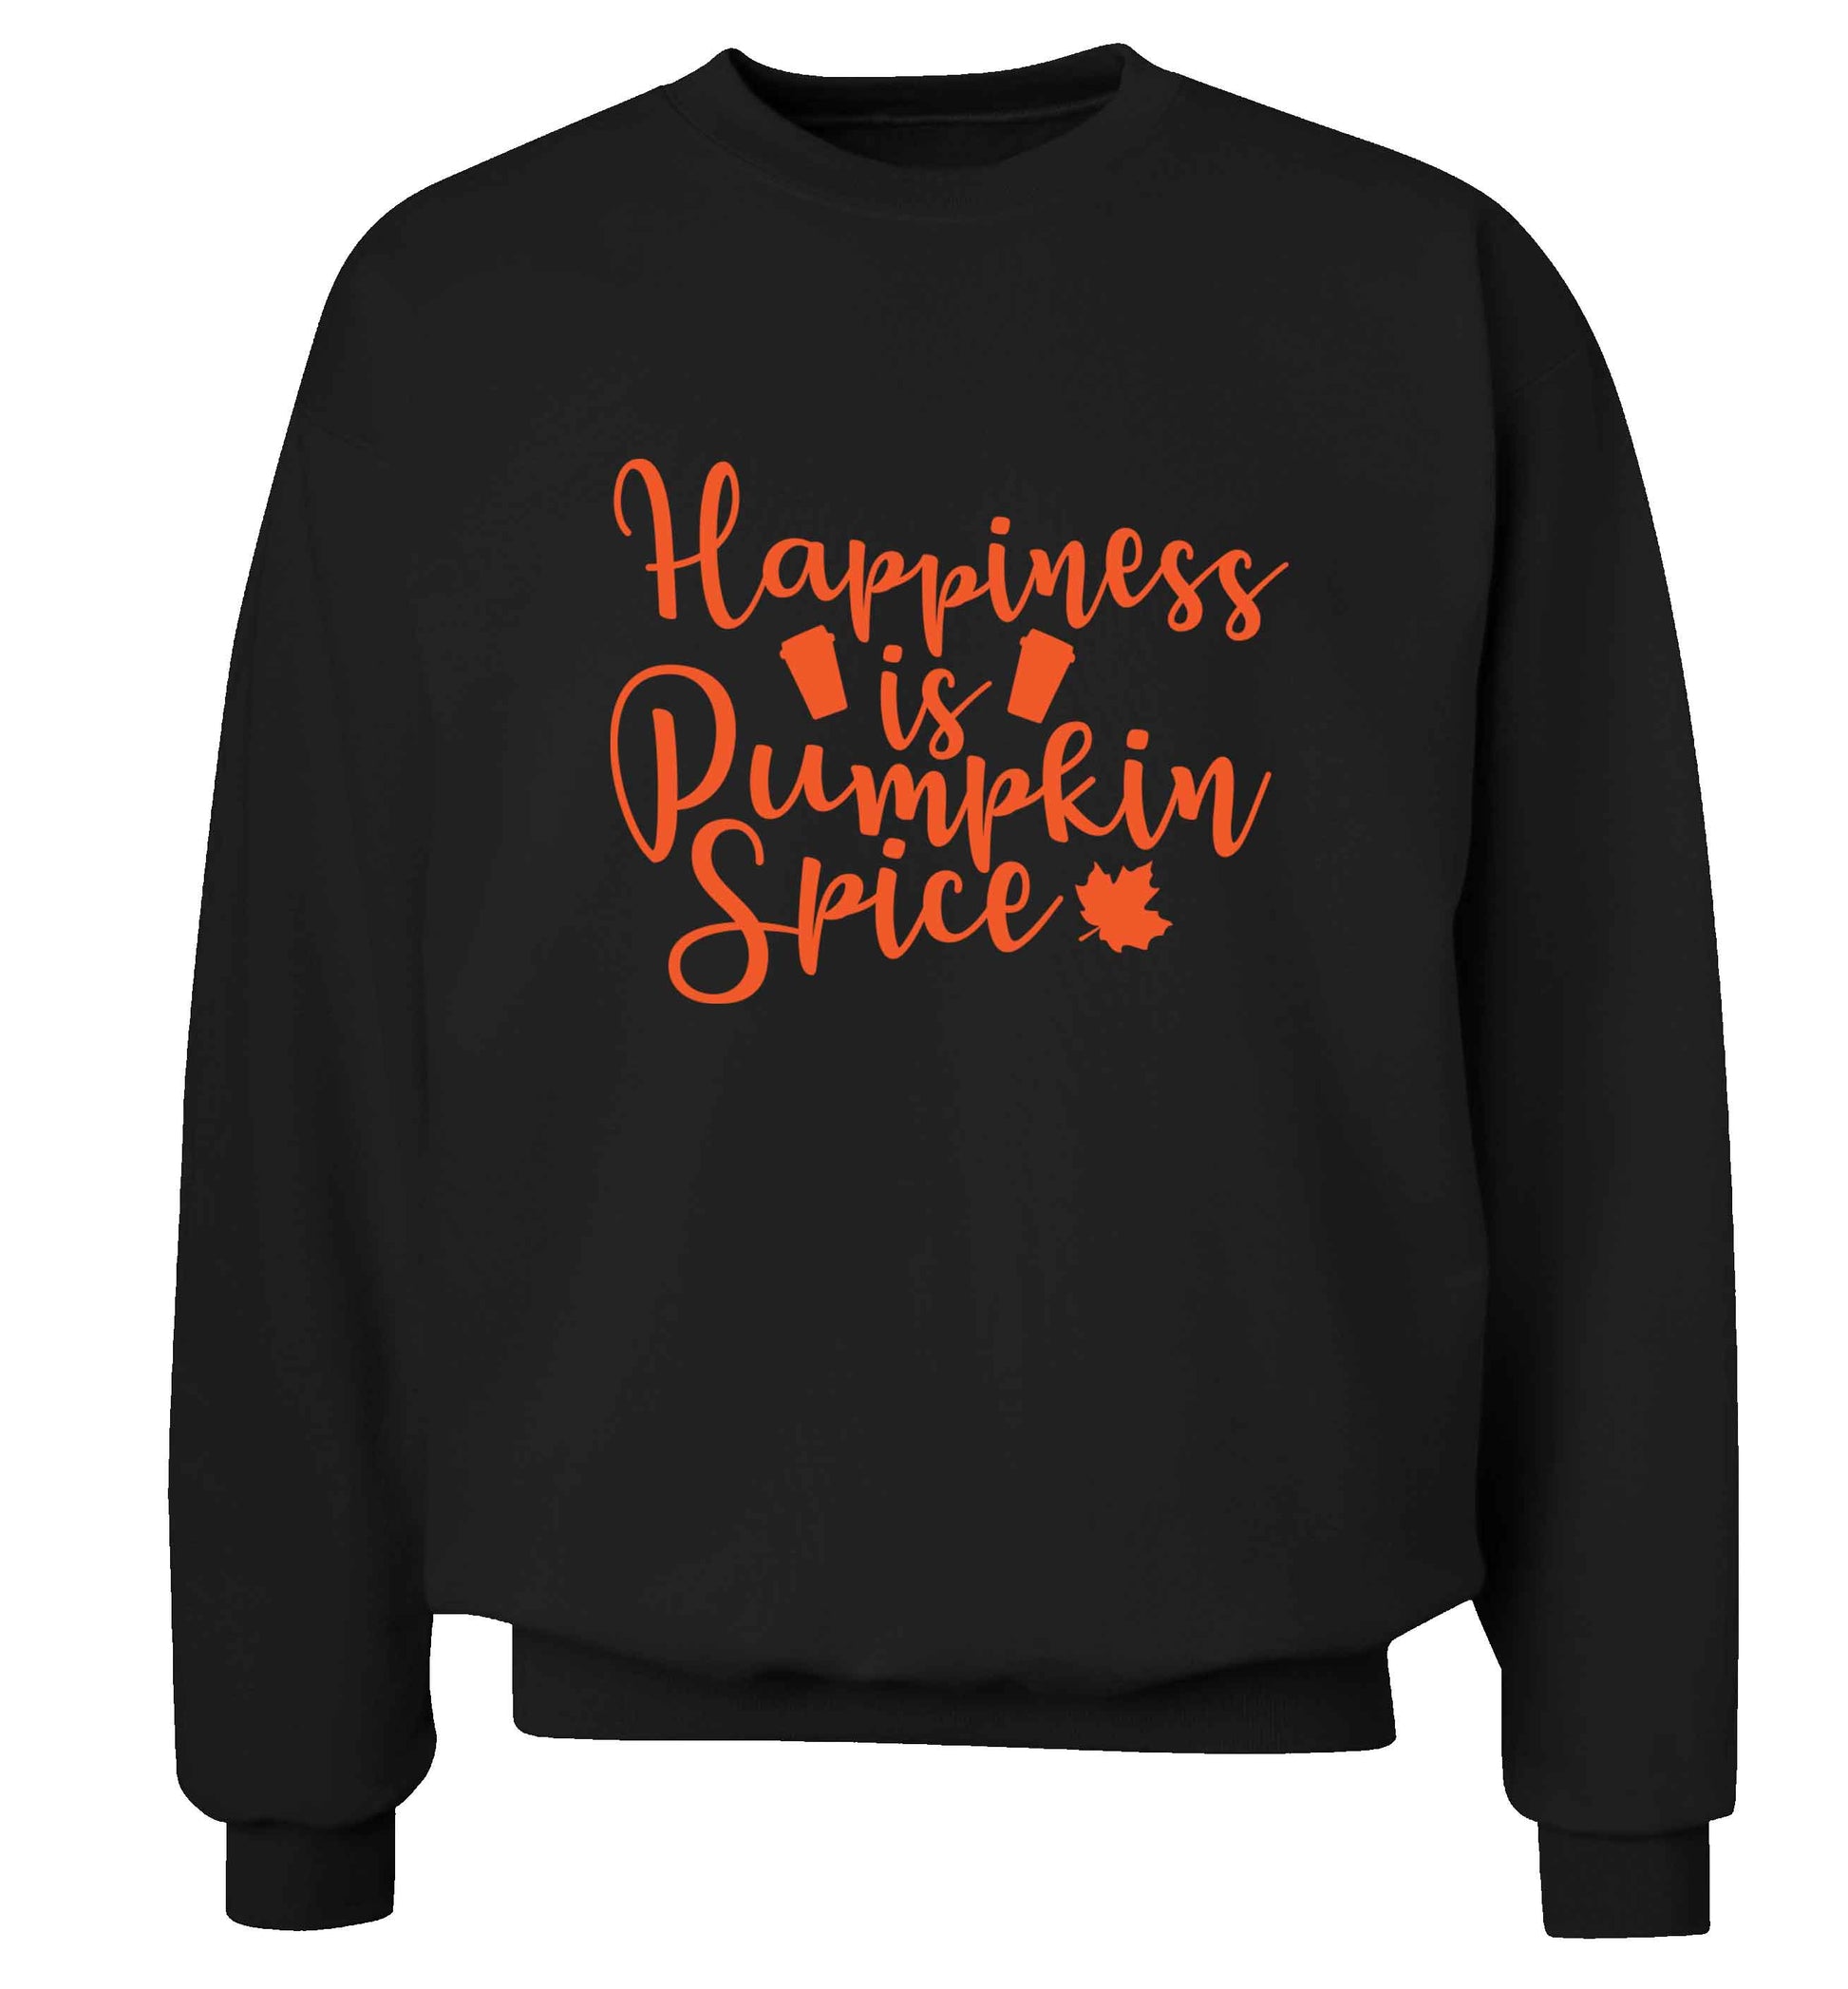 Happiness Pumpkin Spice adult's unisex black sweater 2XL